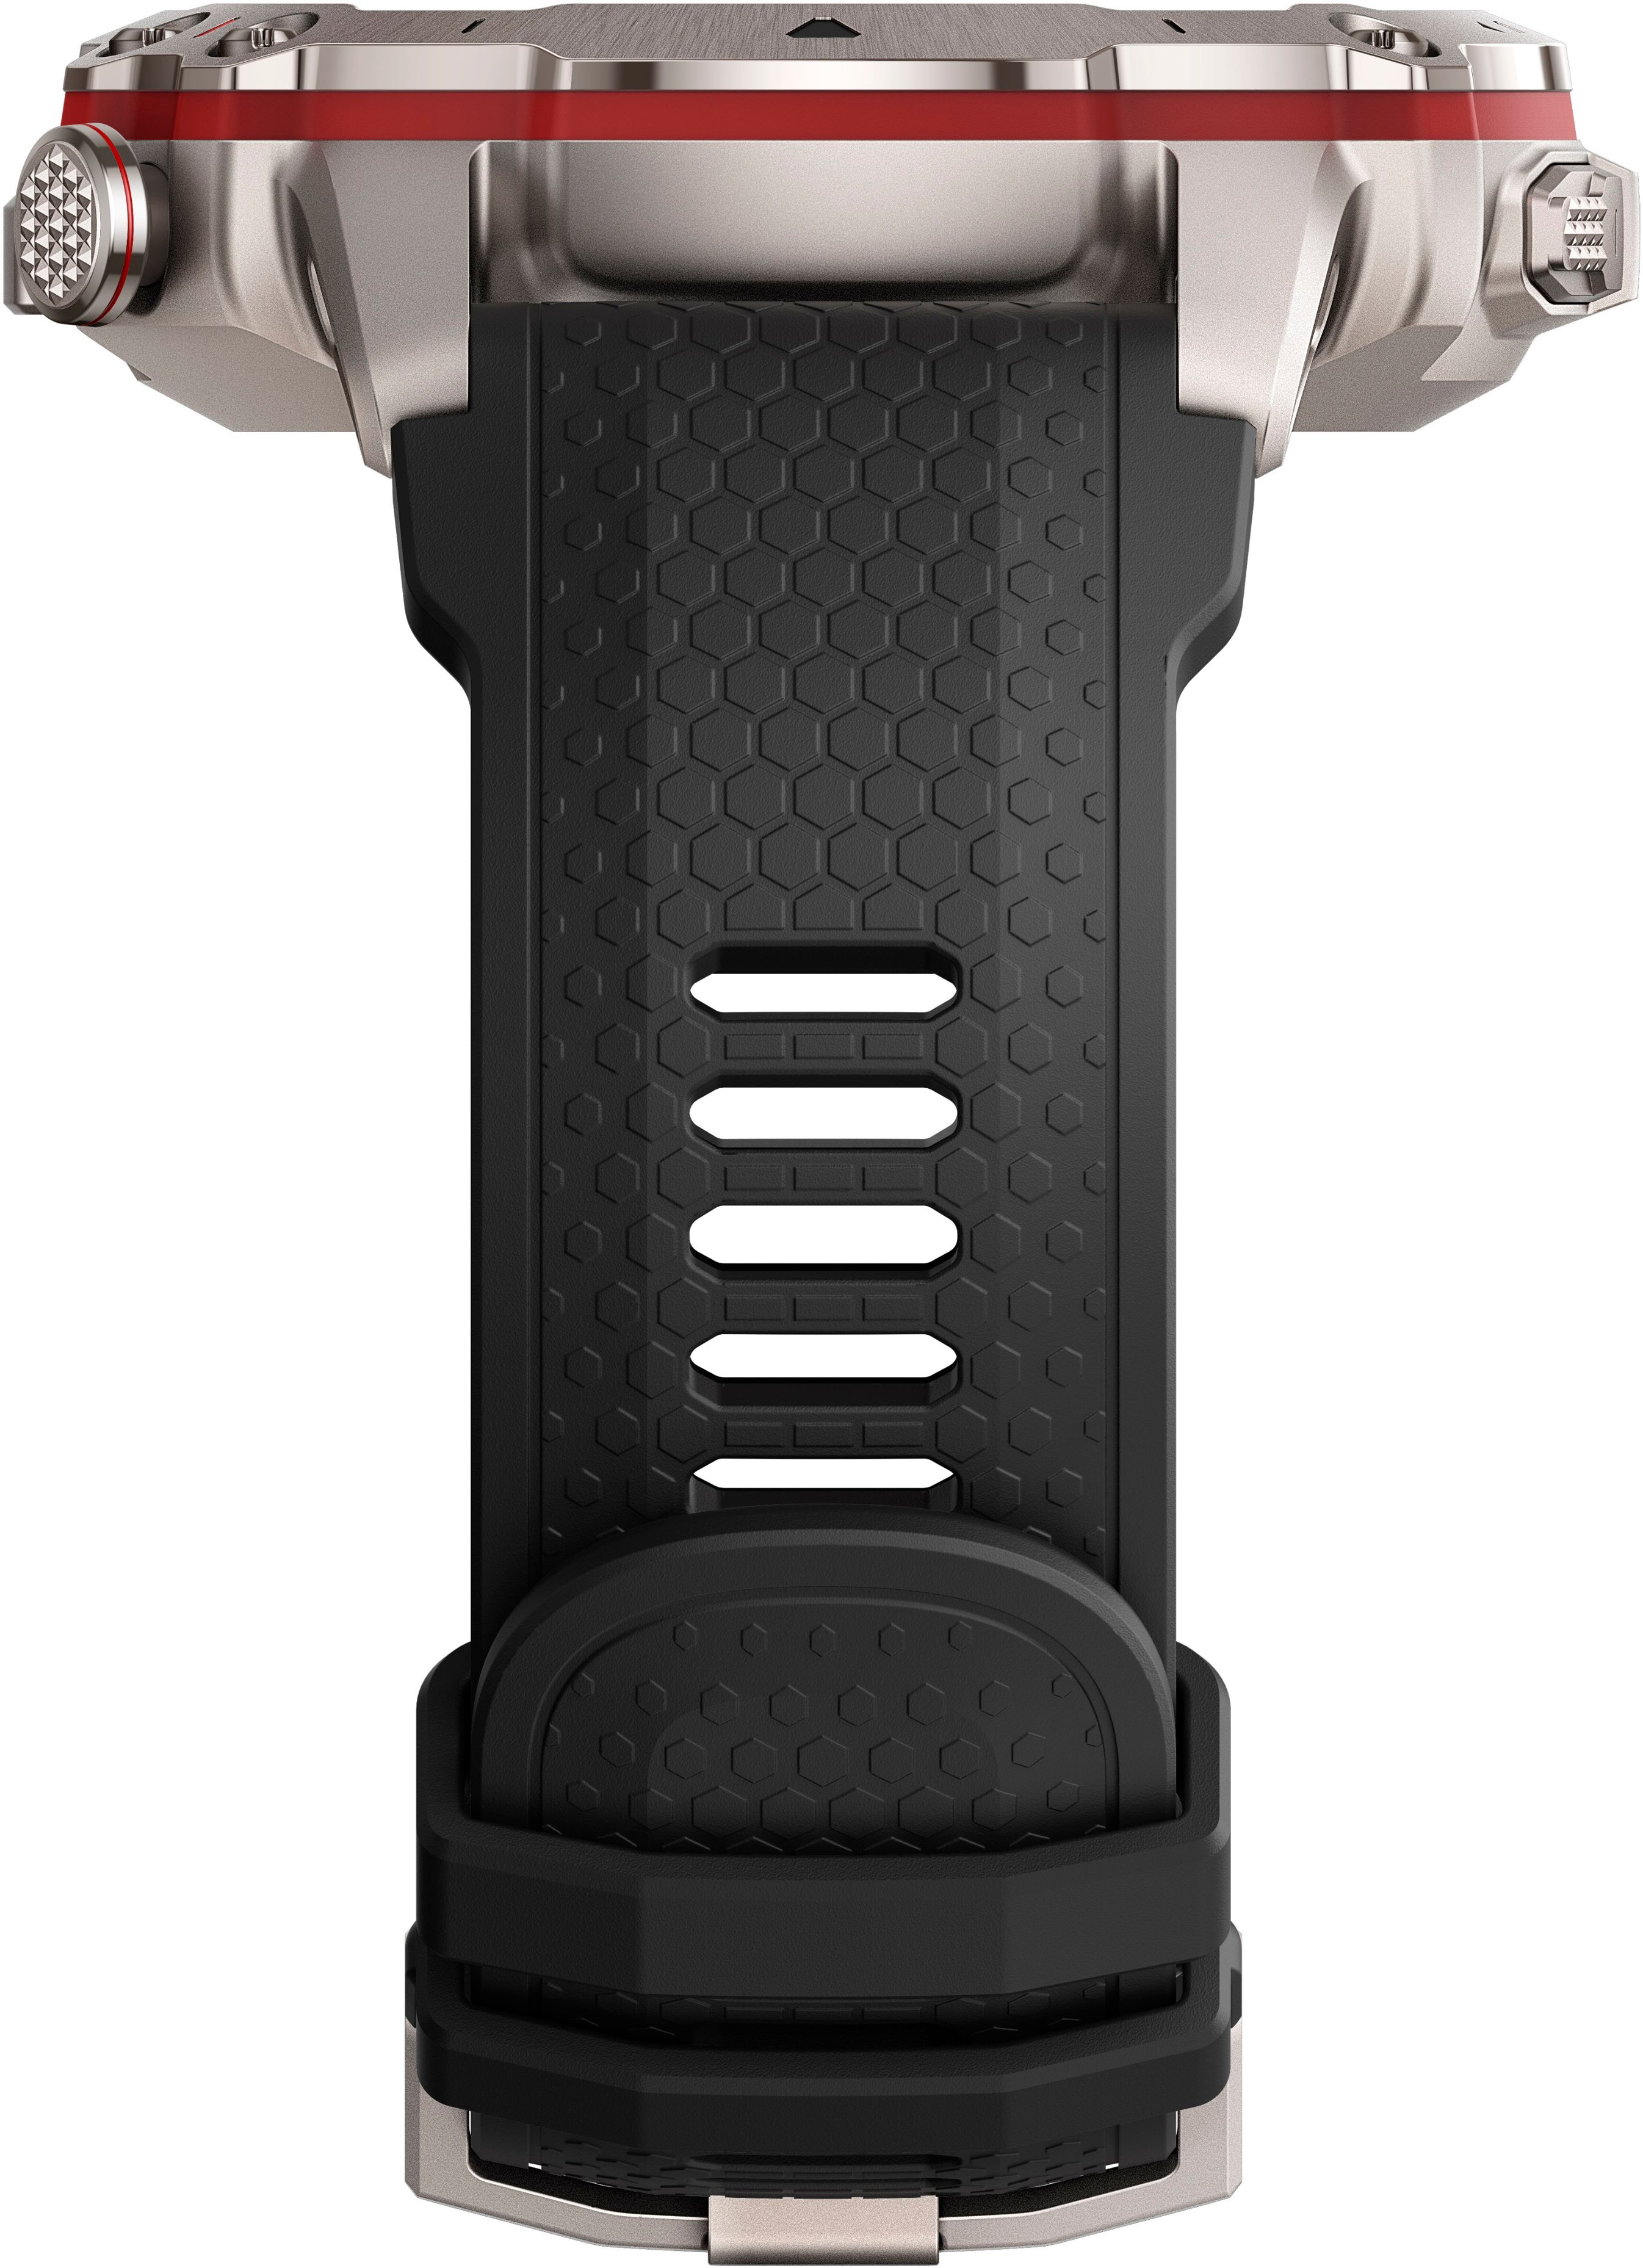 Amazfit T-Rex Ultra Smartwatch 35mm Stainless Steel Sahara